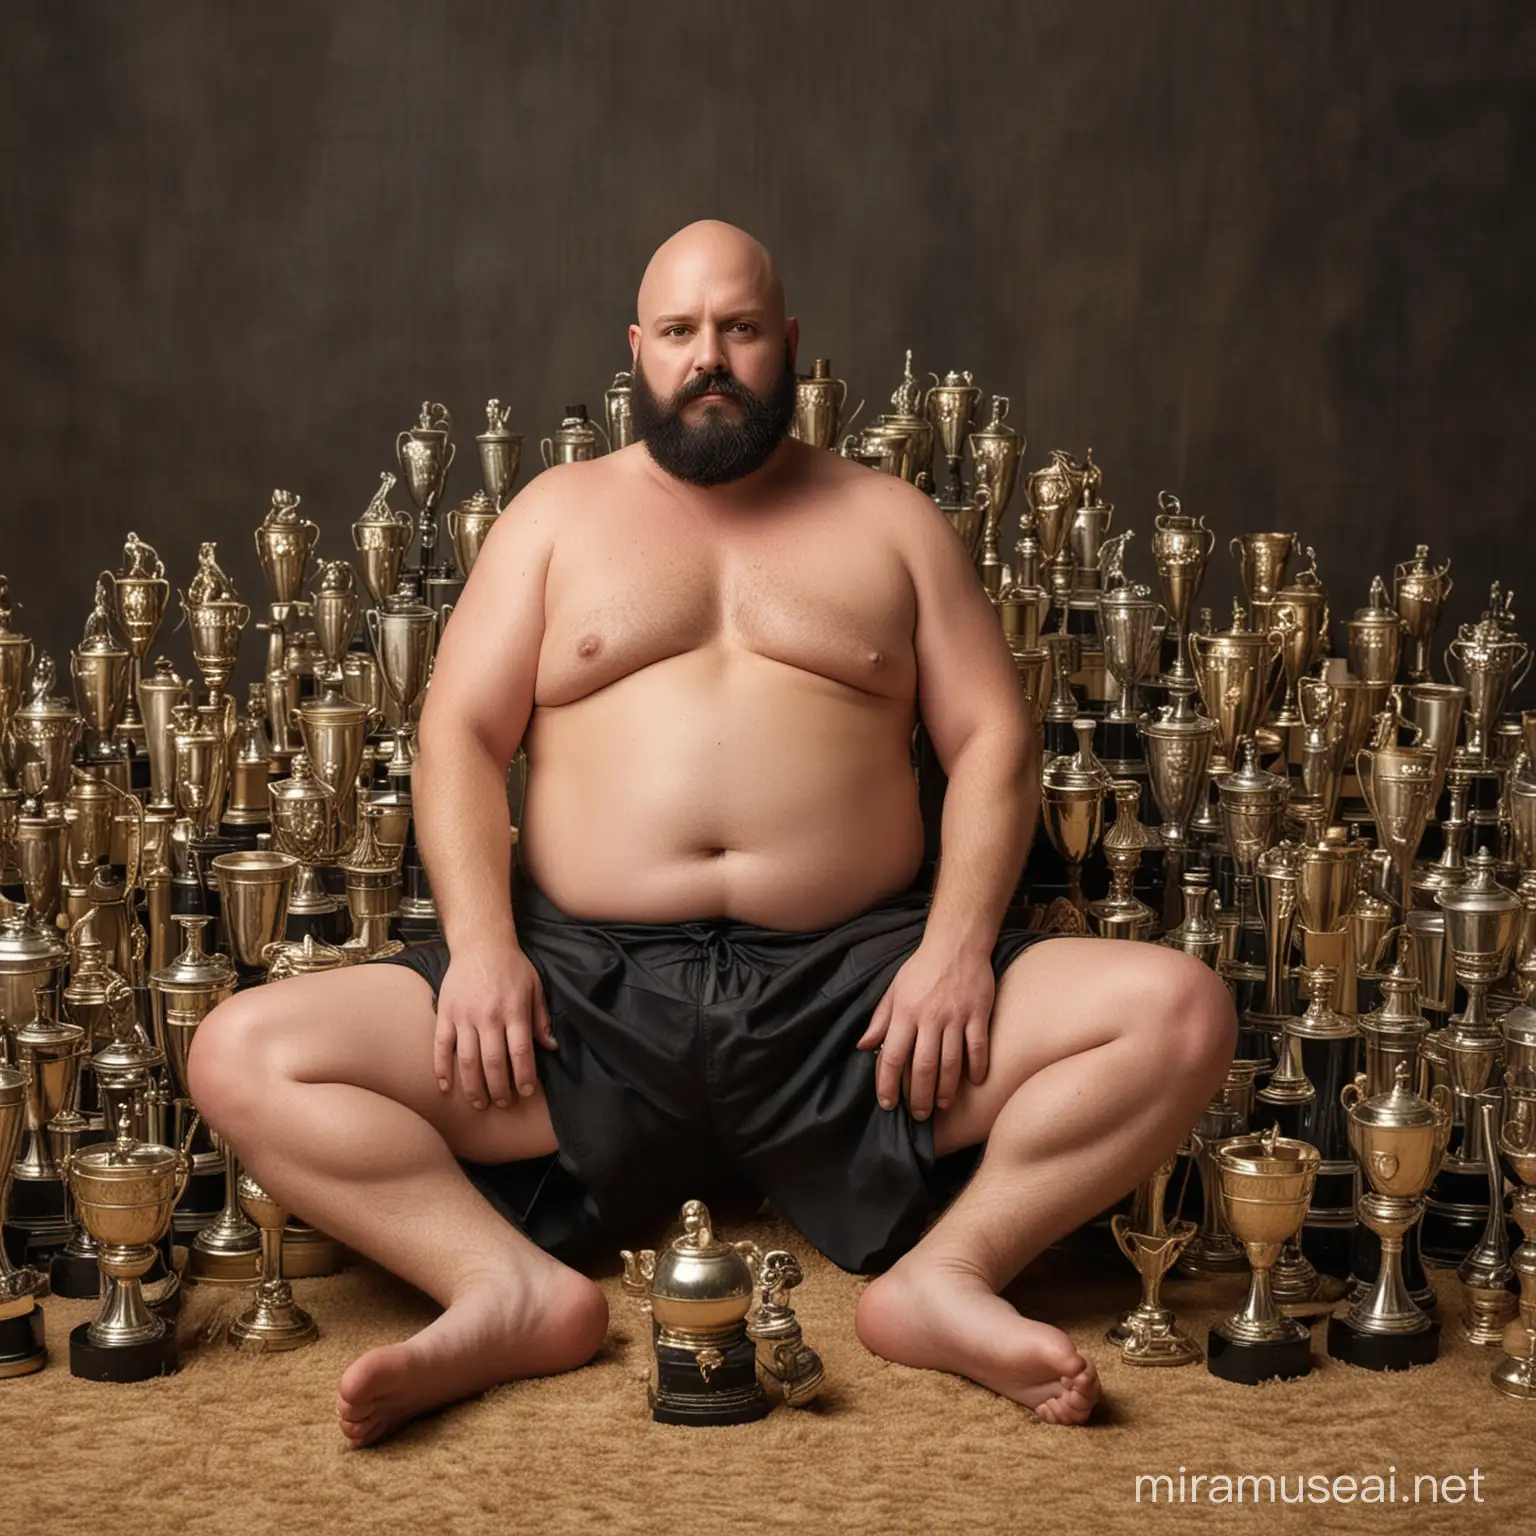 A coroulent bald man with a black beard lies between 100 trophies